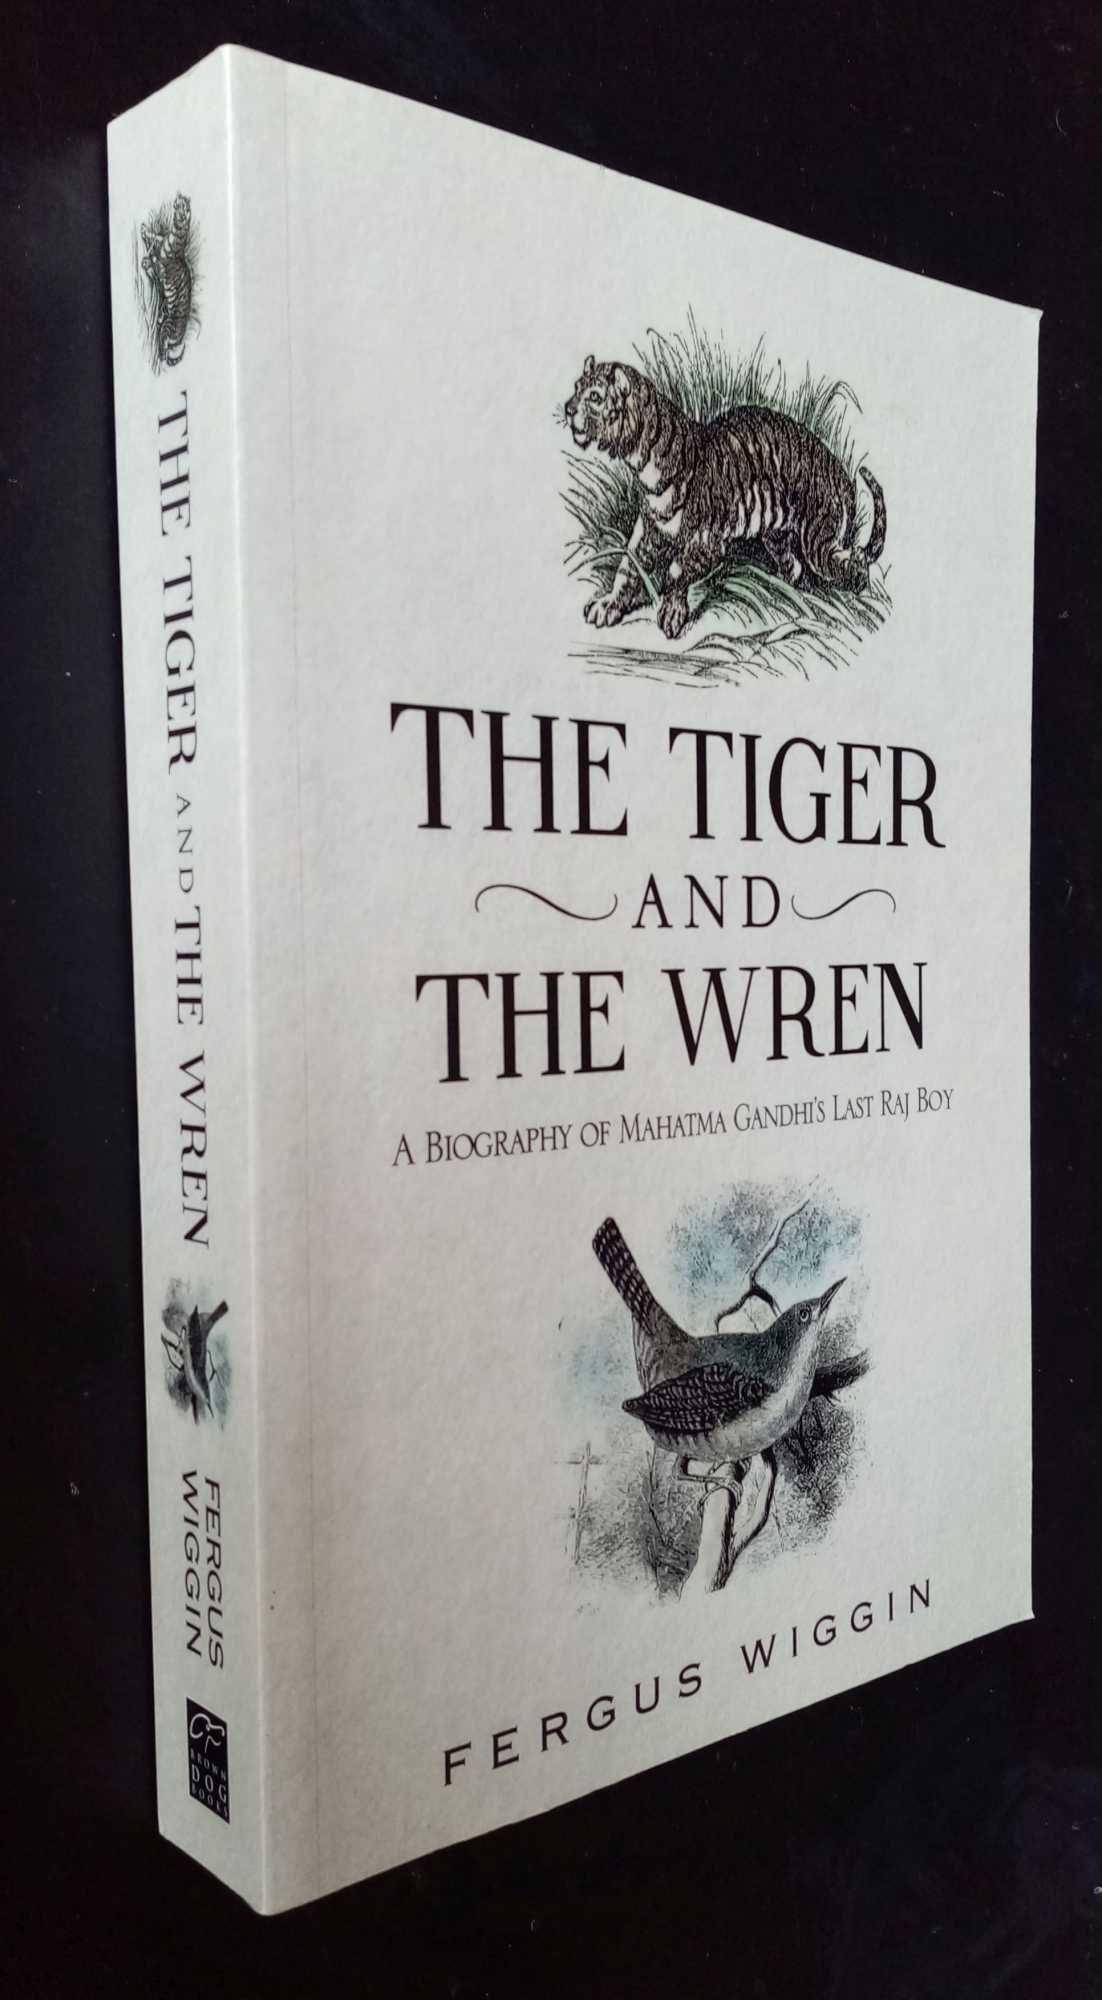 Fergus Wiggin - The Tiger And The Wren   Biography of Mahatma Gandhi's last raj boy.